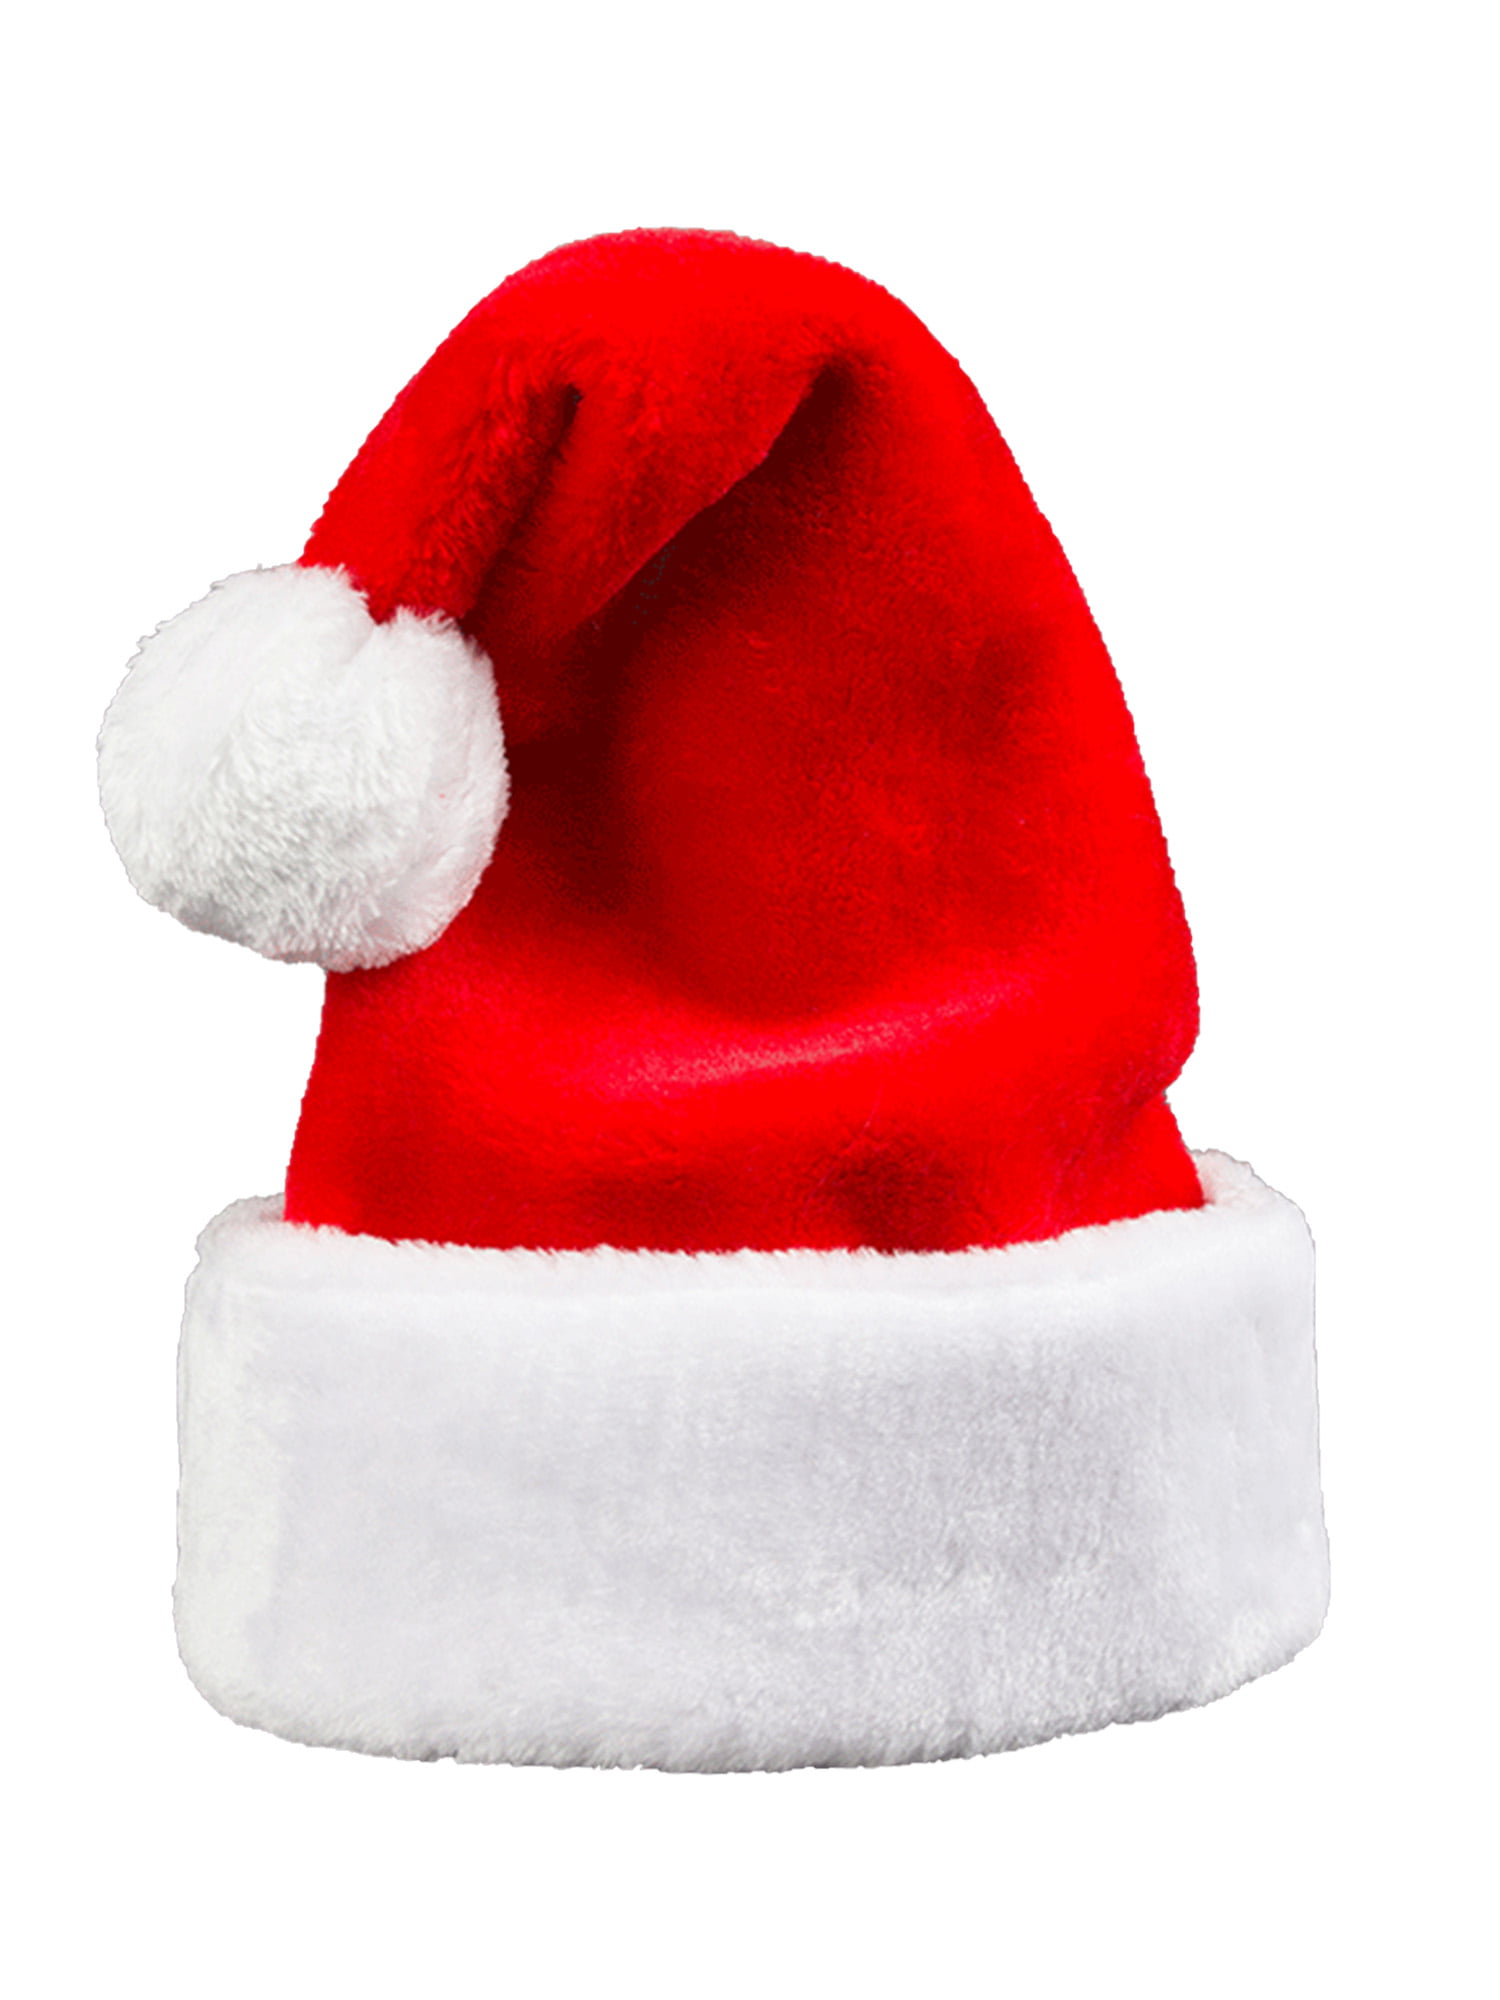 Details about   Peeps Yellow Chick Red Santa Hat Plush Stuffed Animal Stocking Stuffer Christmas 